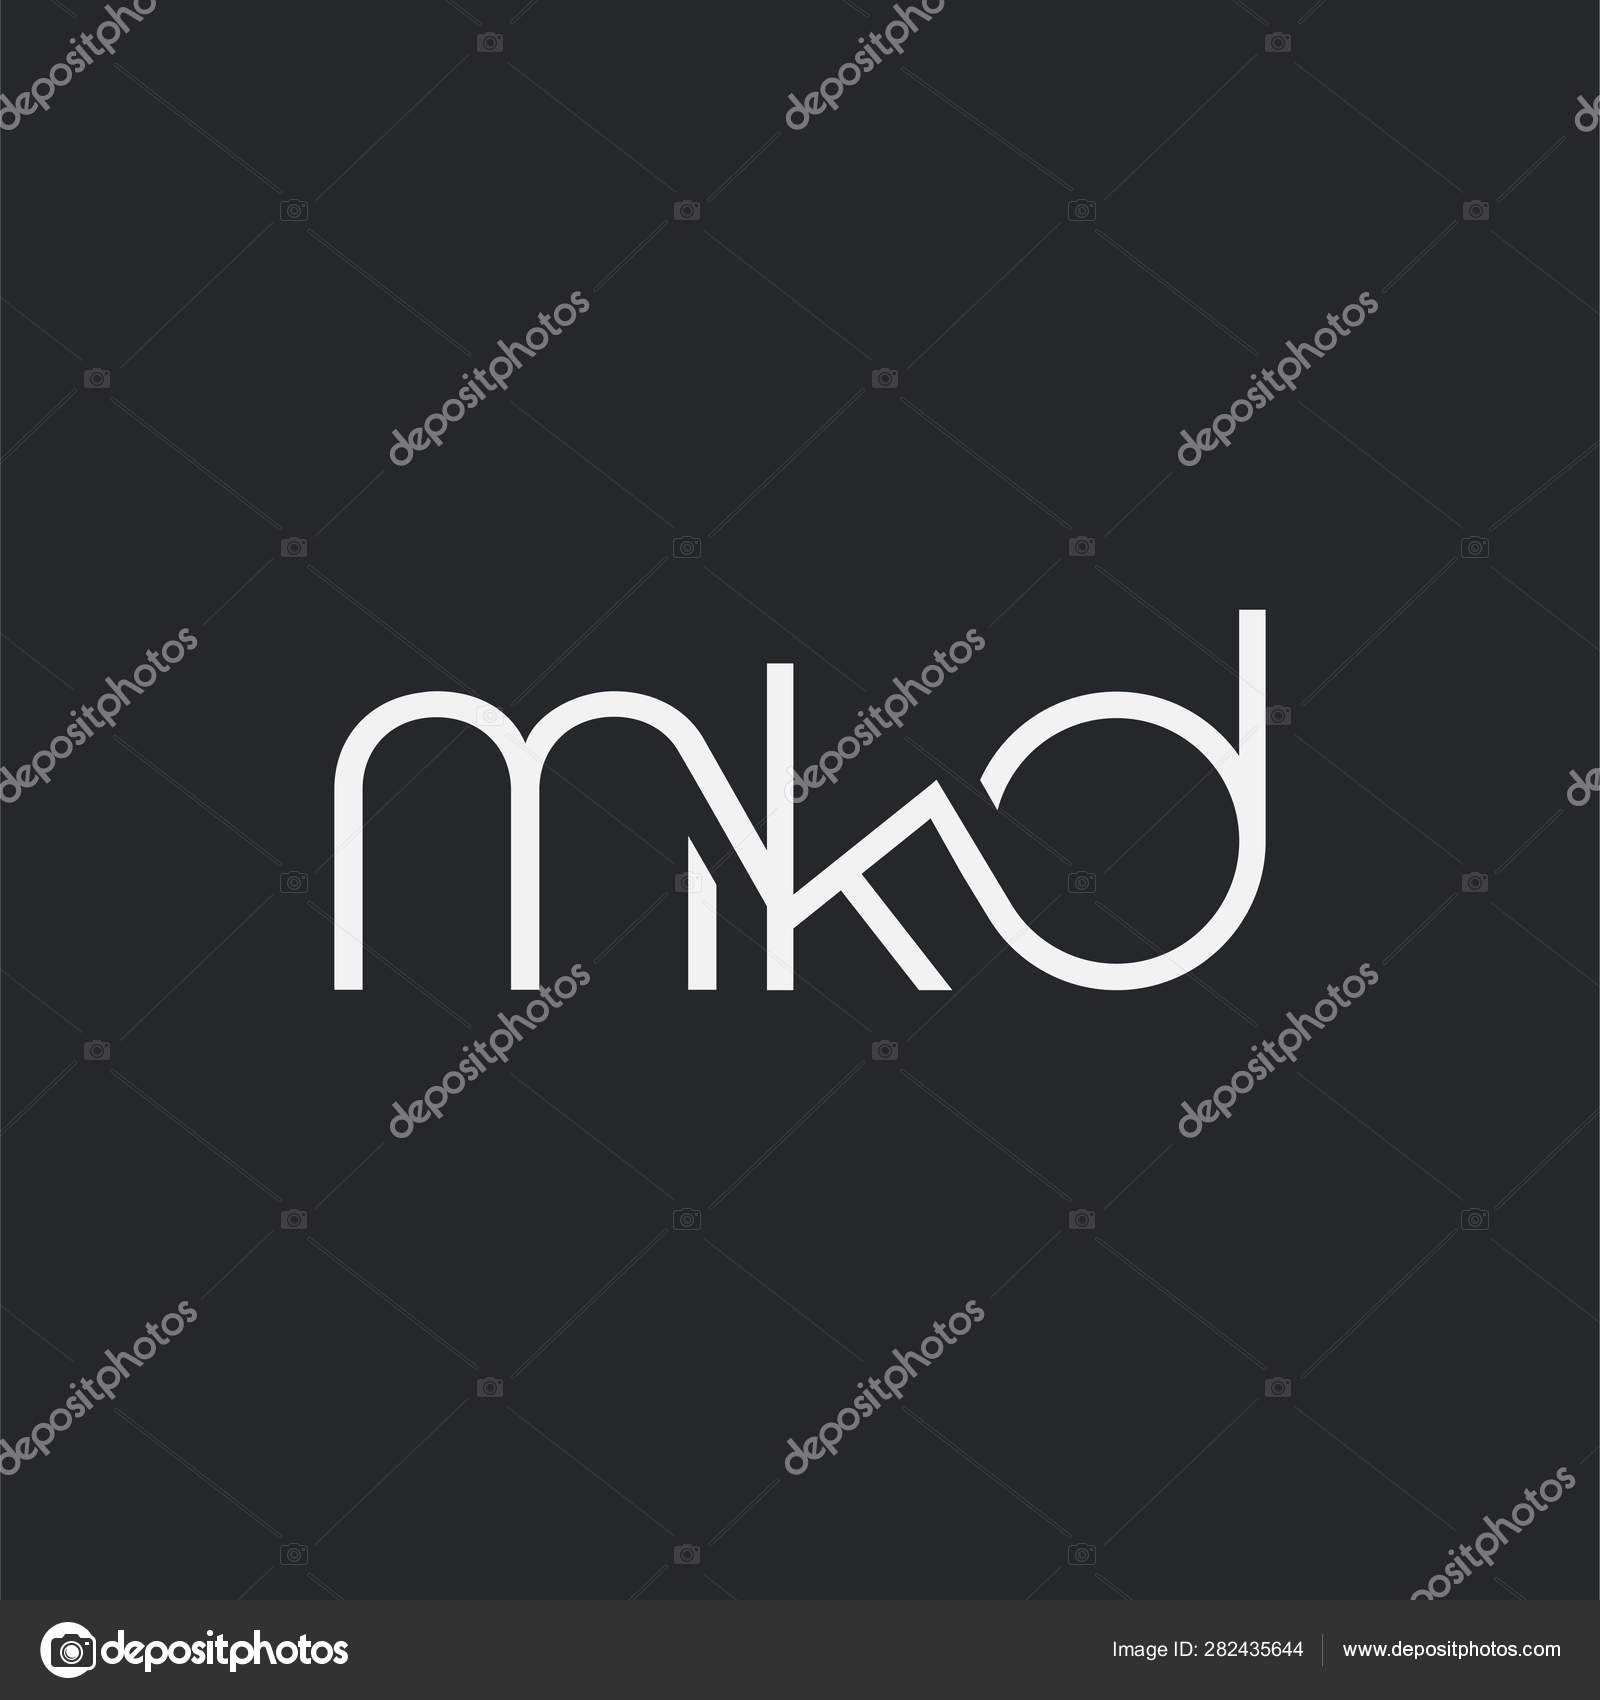 logo mkd